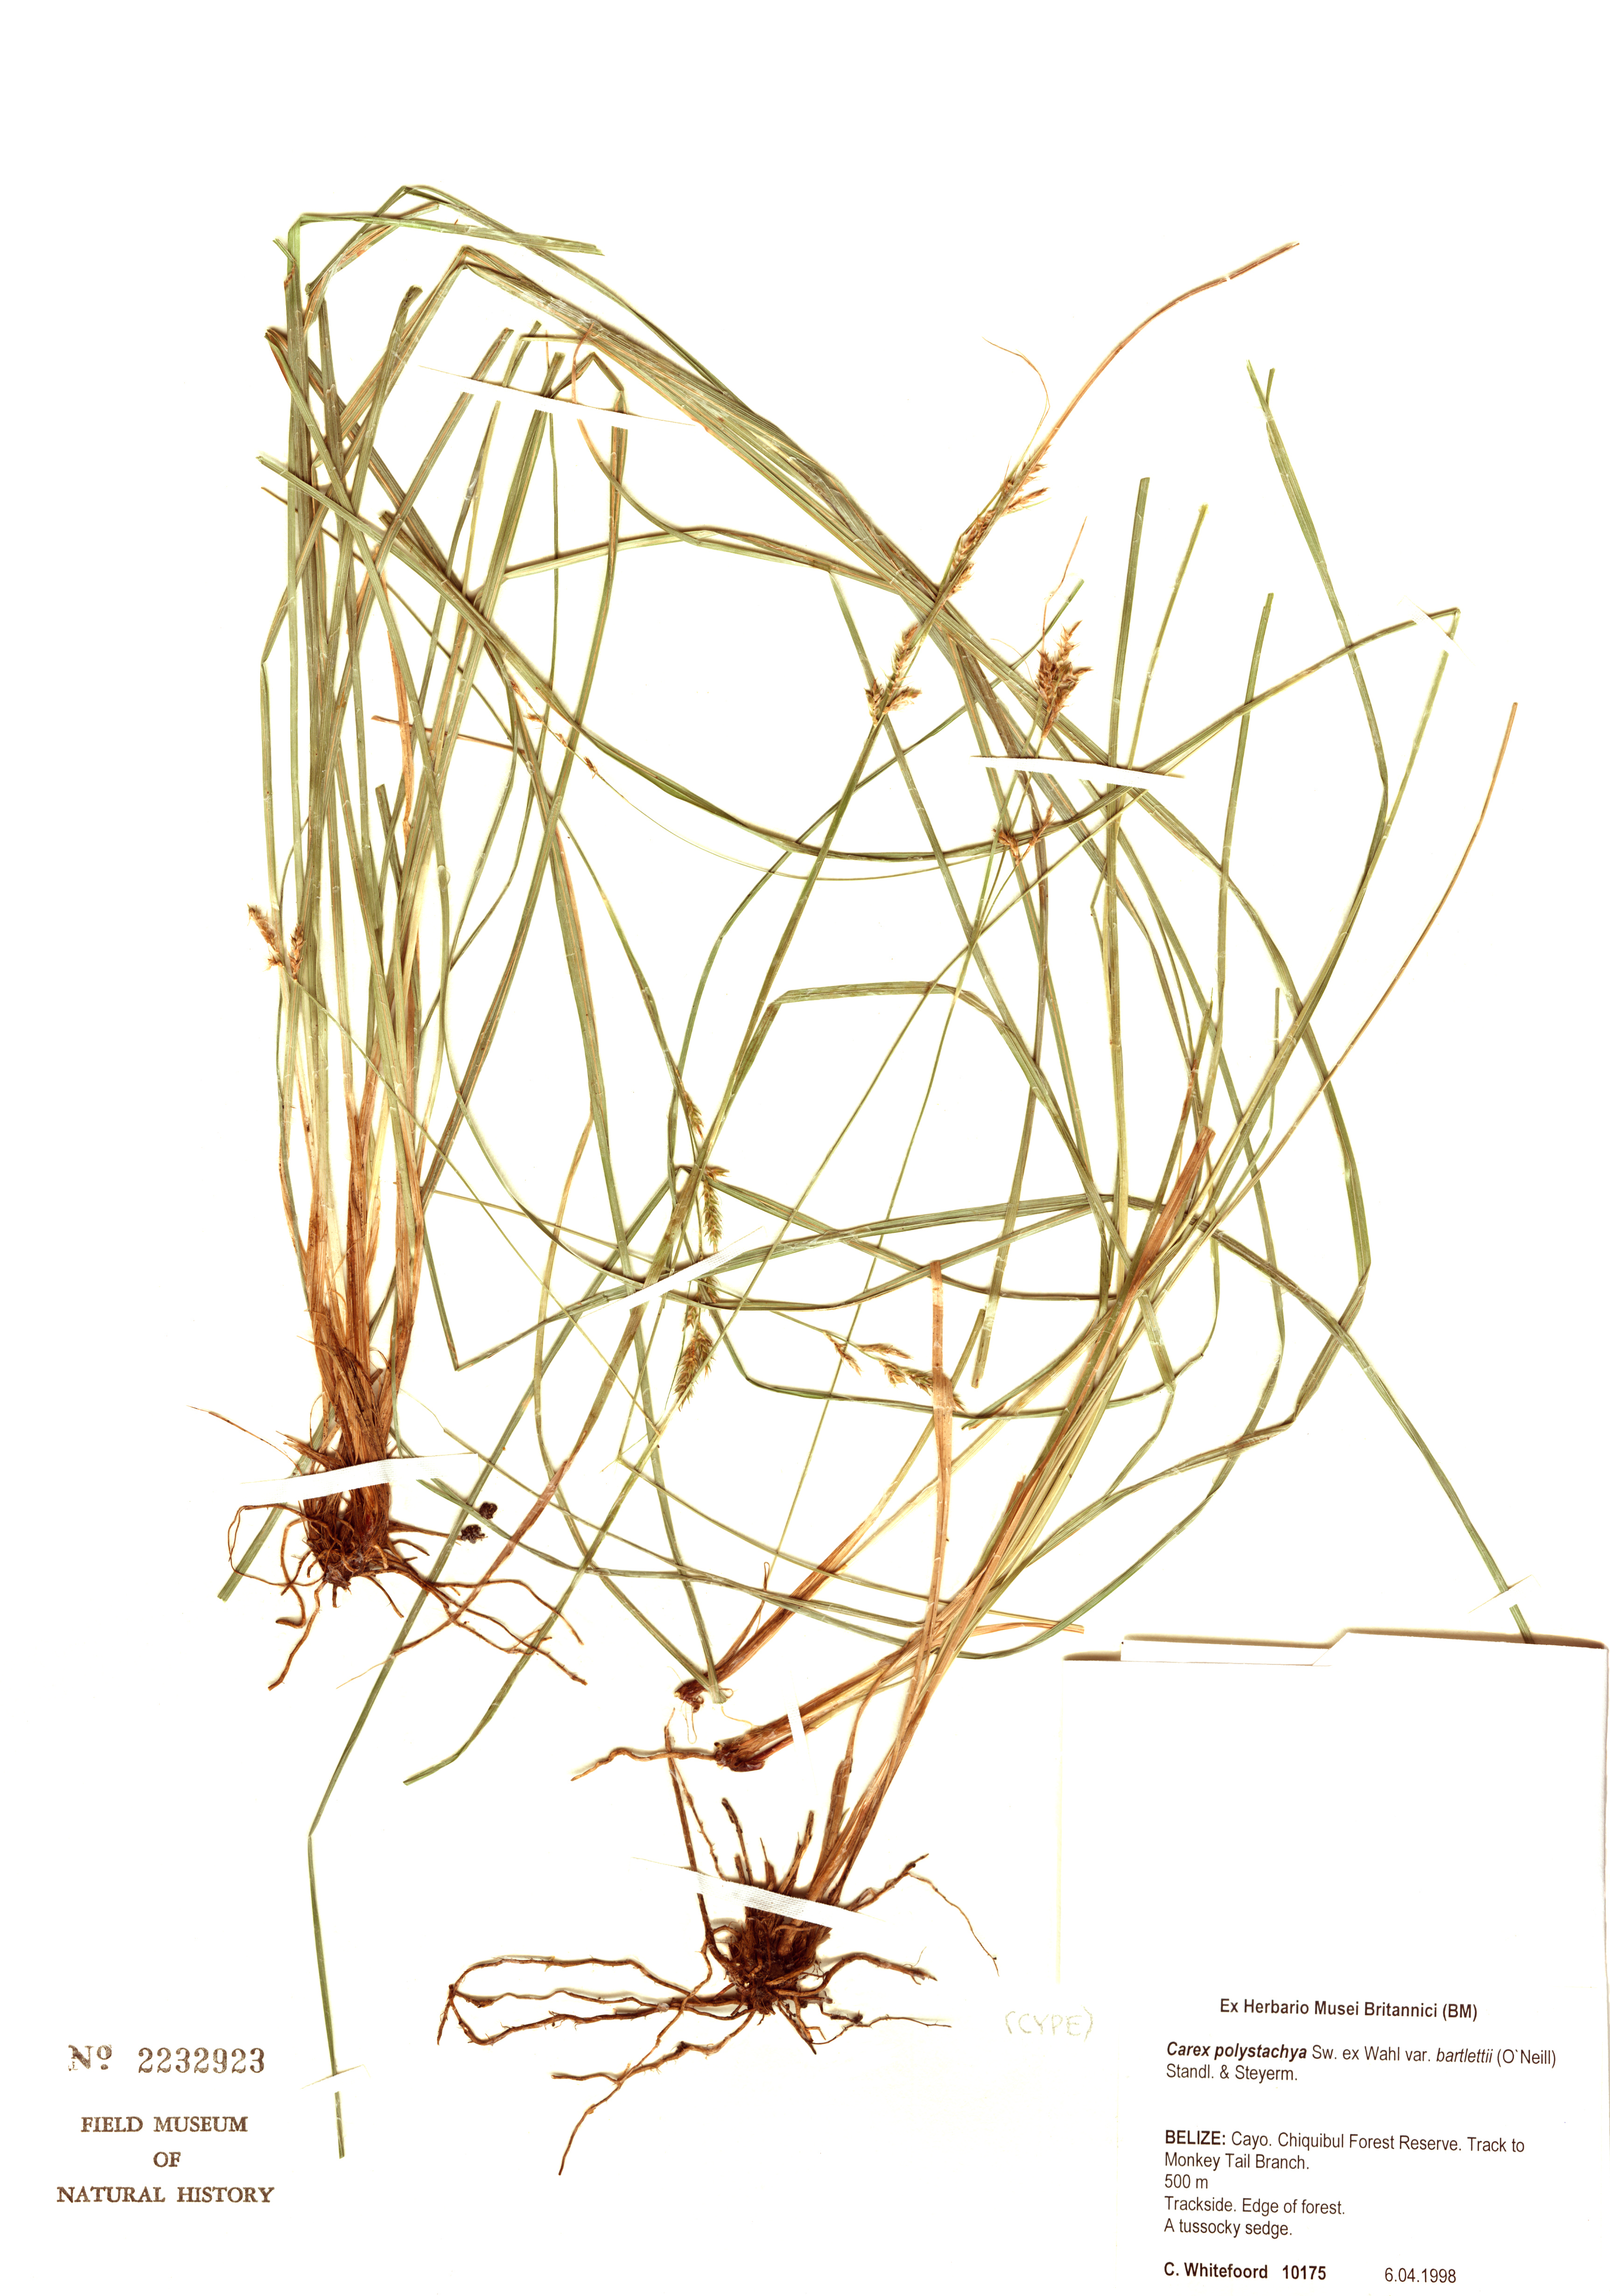 Carex polystachya var. bartlettii image